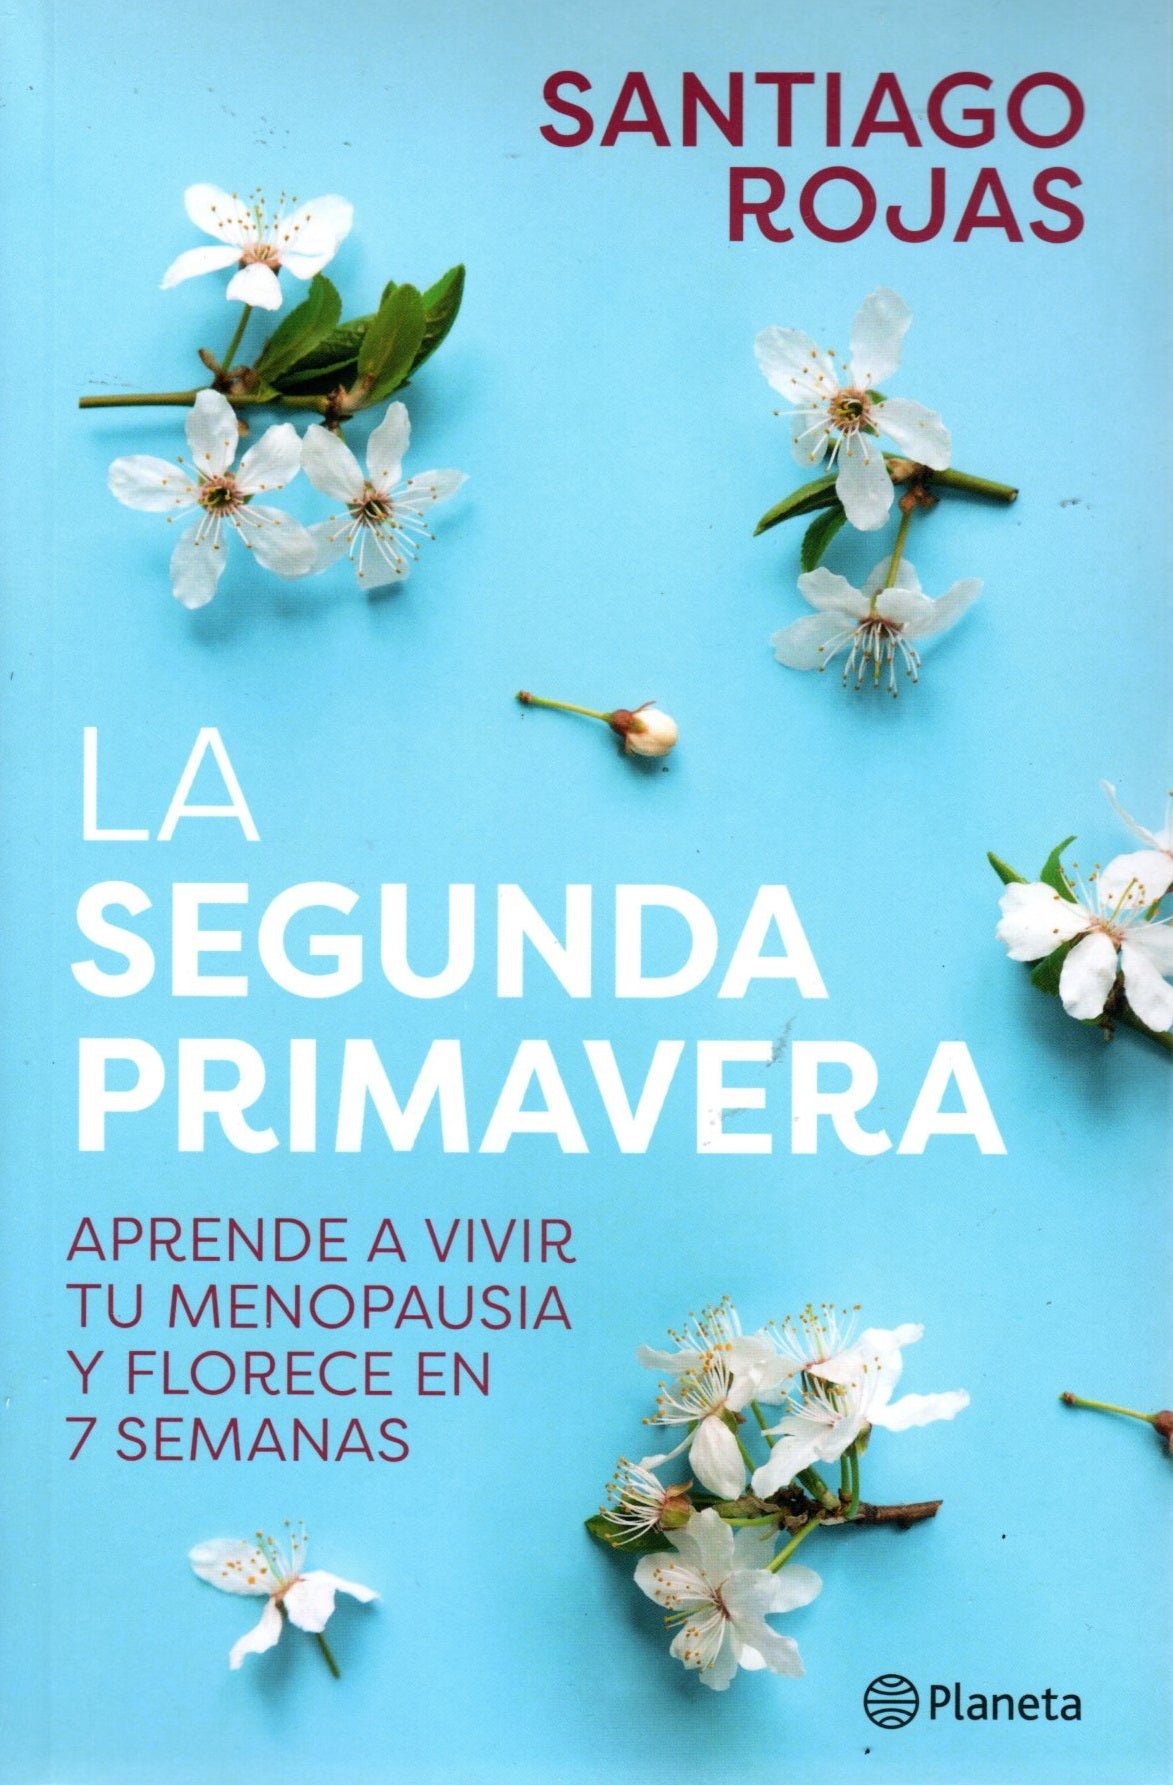 Libro Santiago Rojas - La Segunda Primavera